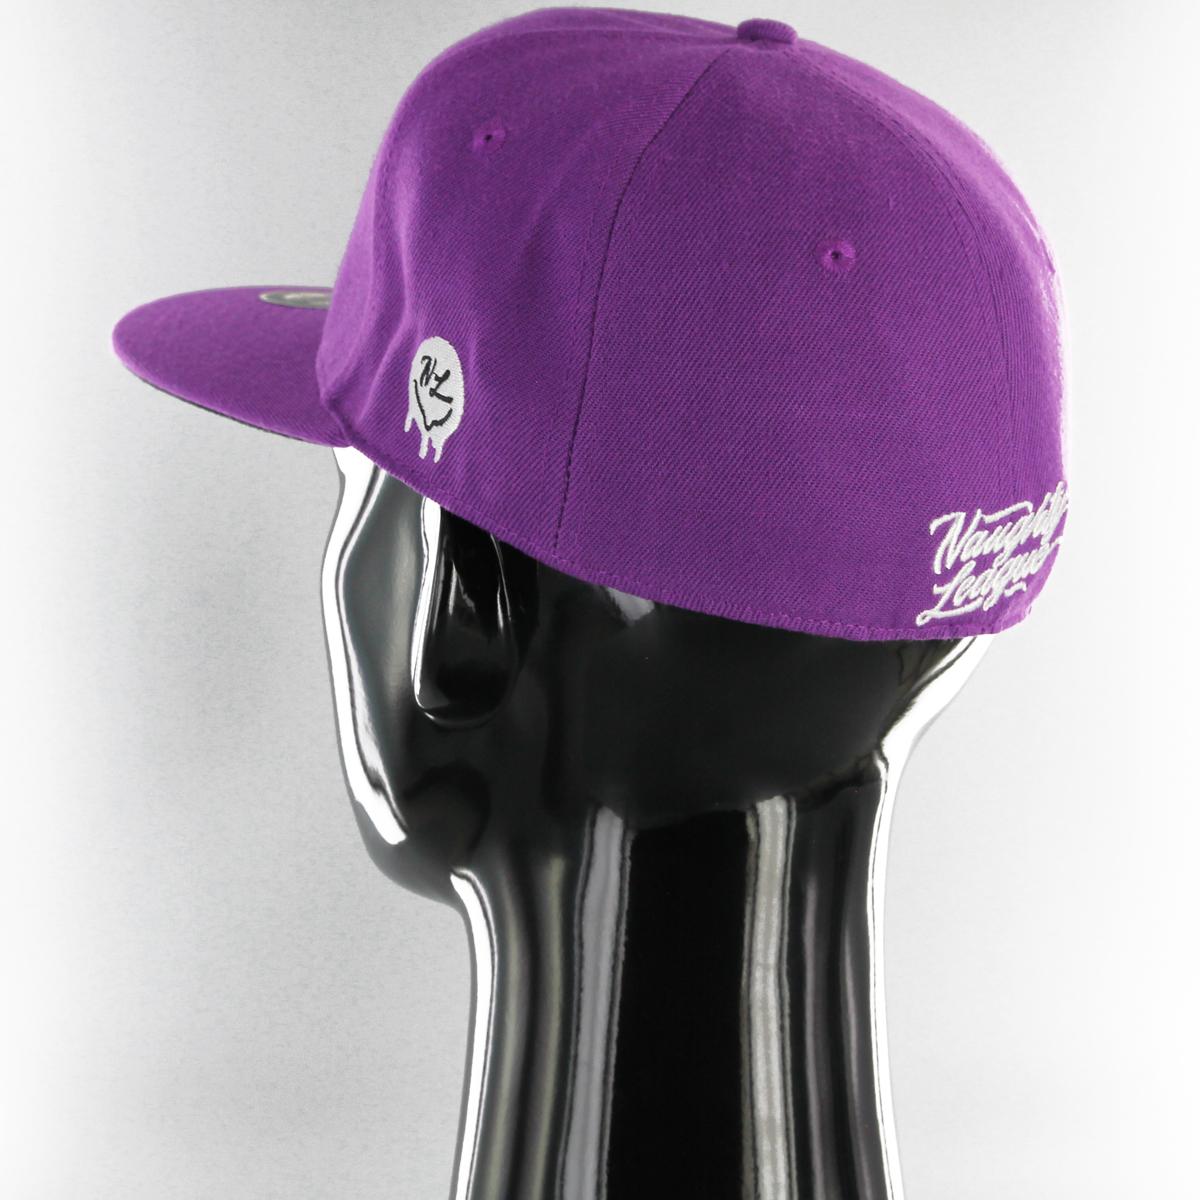 Naughty League San Jose Stalkers fitted purple - Shop-Tetuan